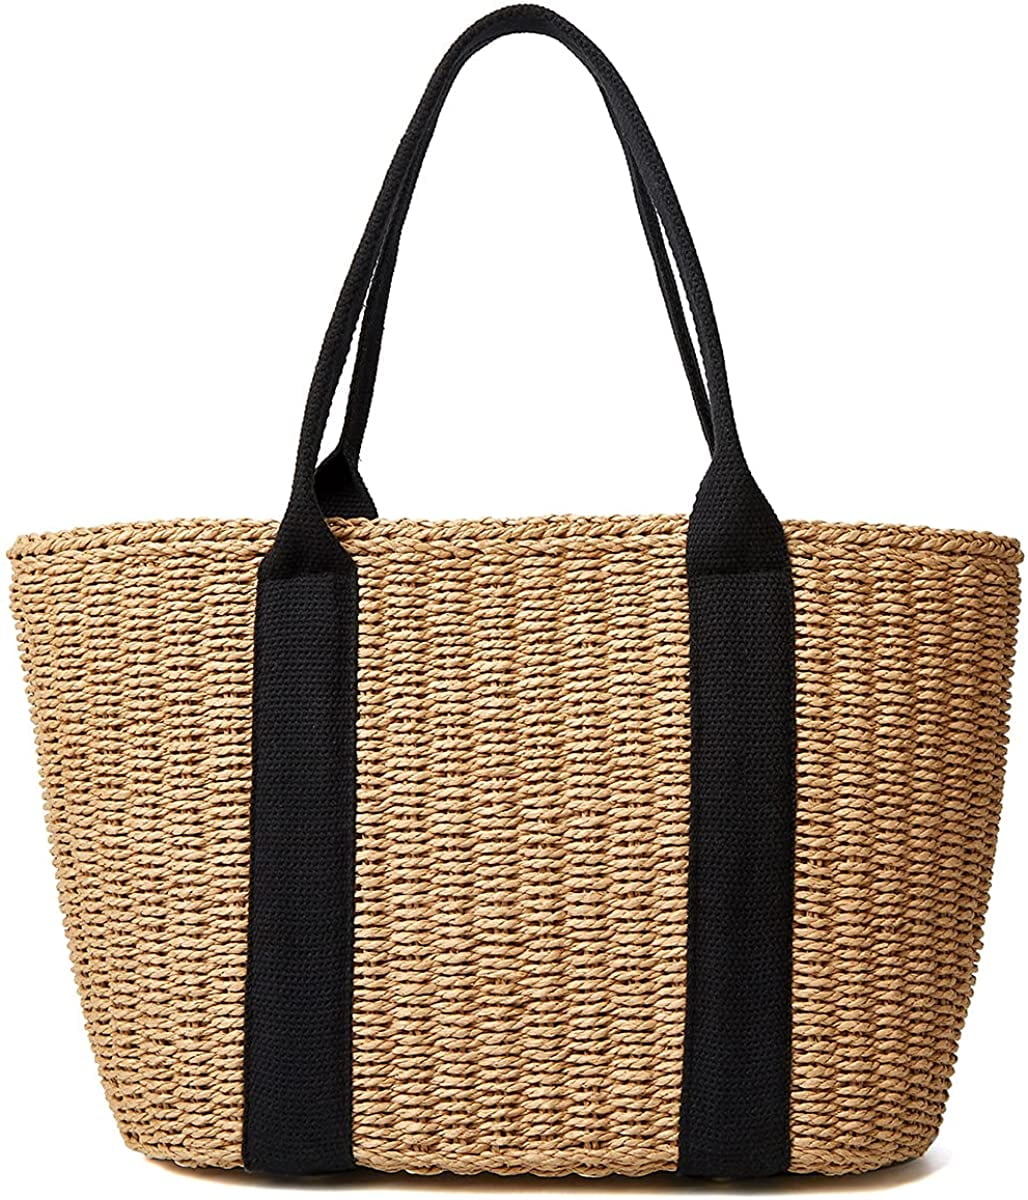 Woven Bag Mesh Rope Straw Bags Beach Handbags Summer Shoulder Bags for Women 